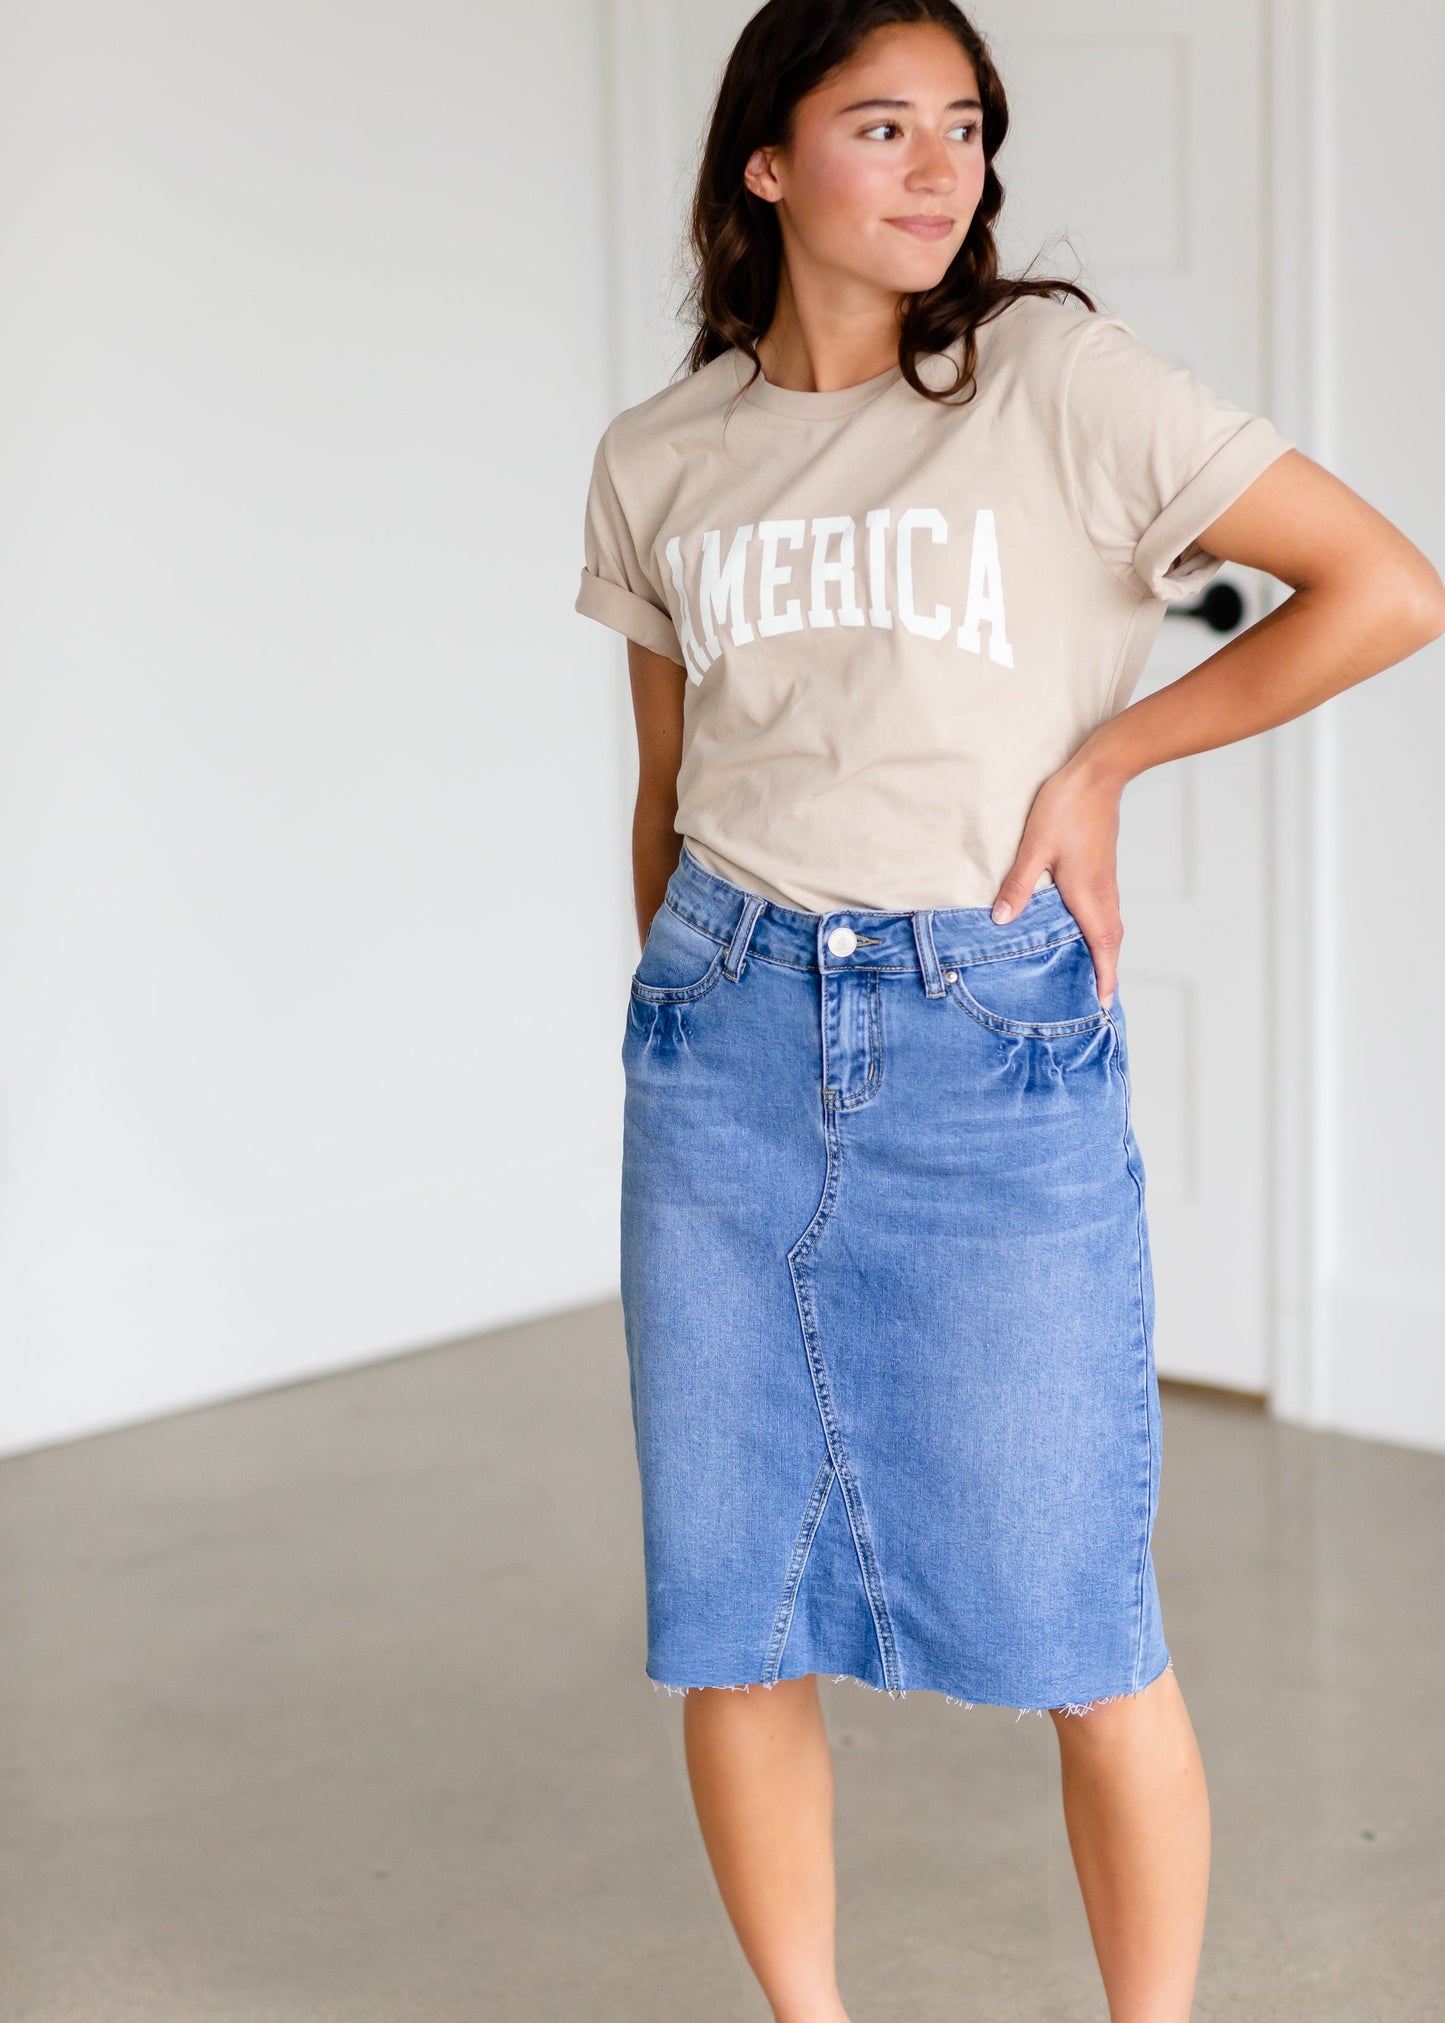 America Graphic T-Shirt Tops